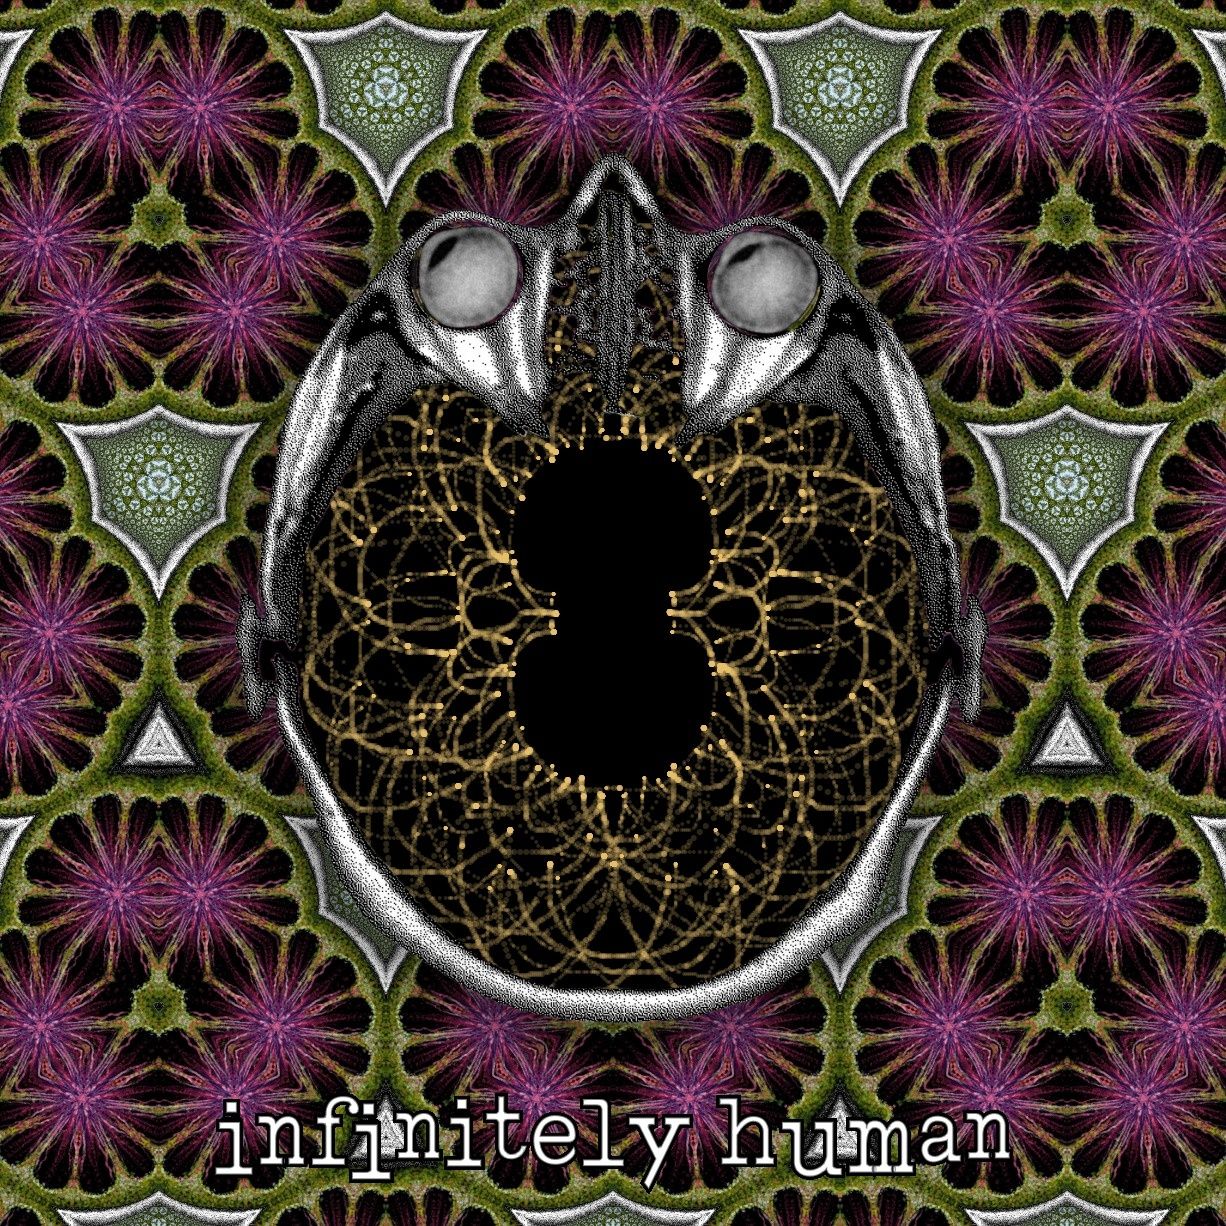 infinitely human